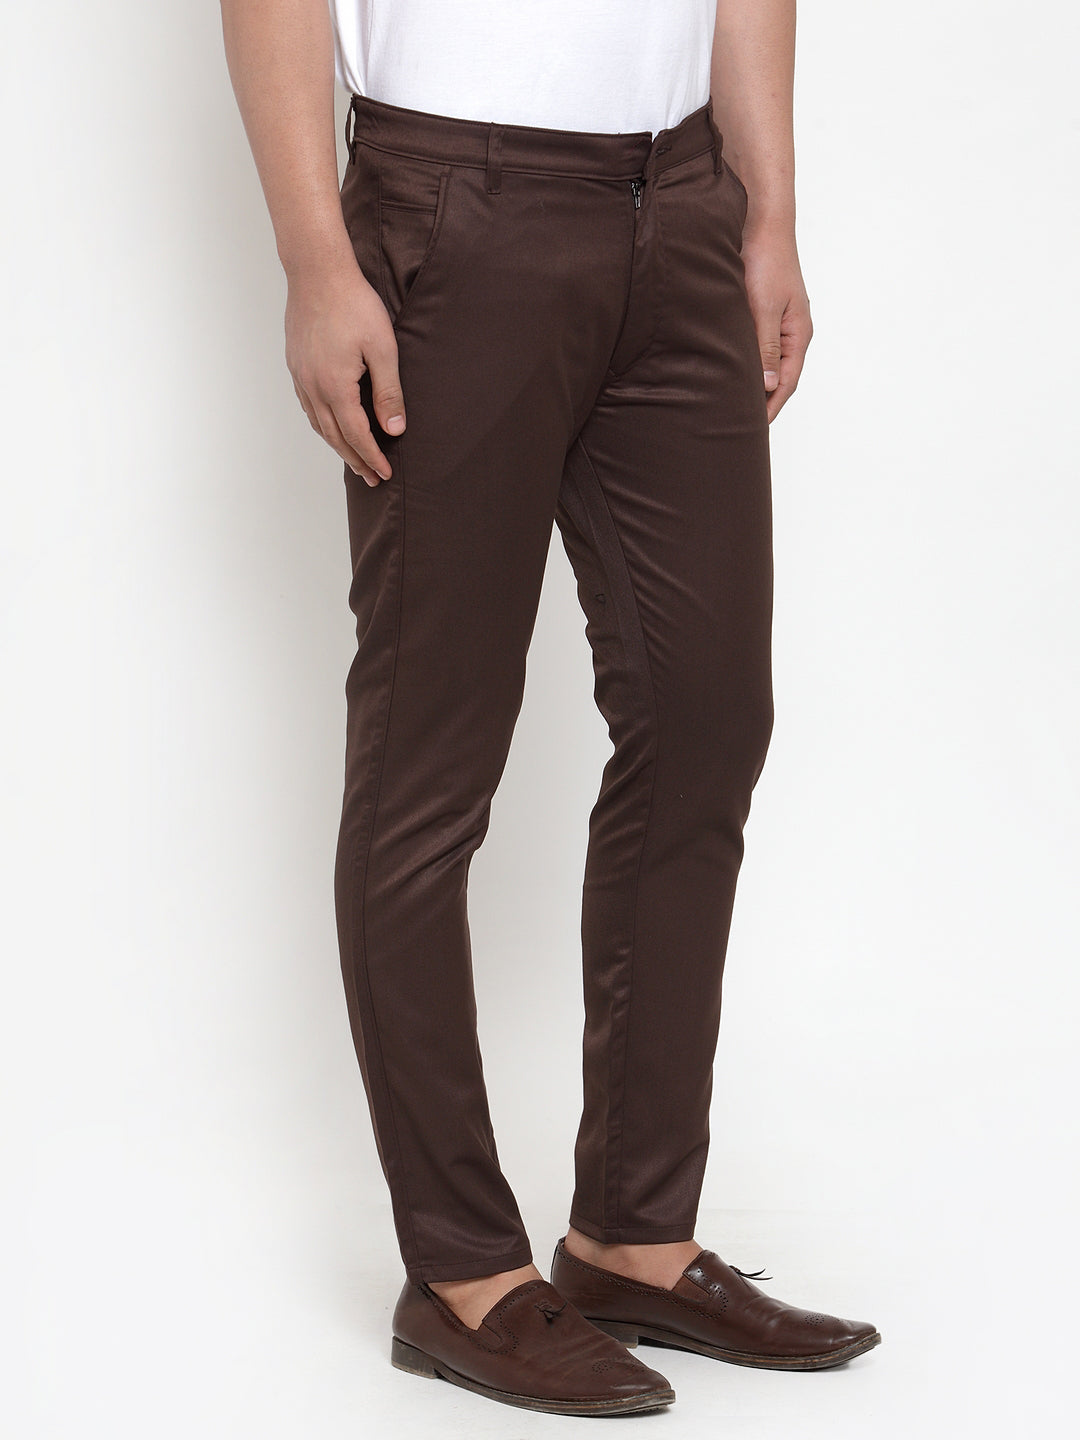 Jainish Men's Brown Solid Formal Trousers